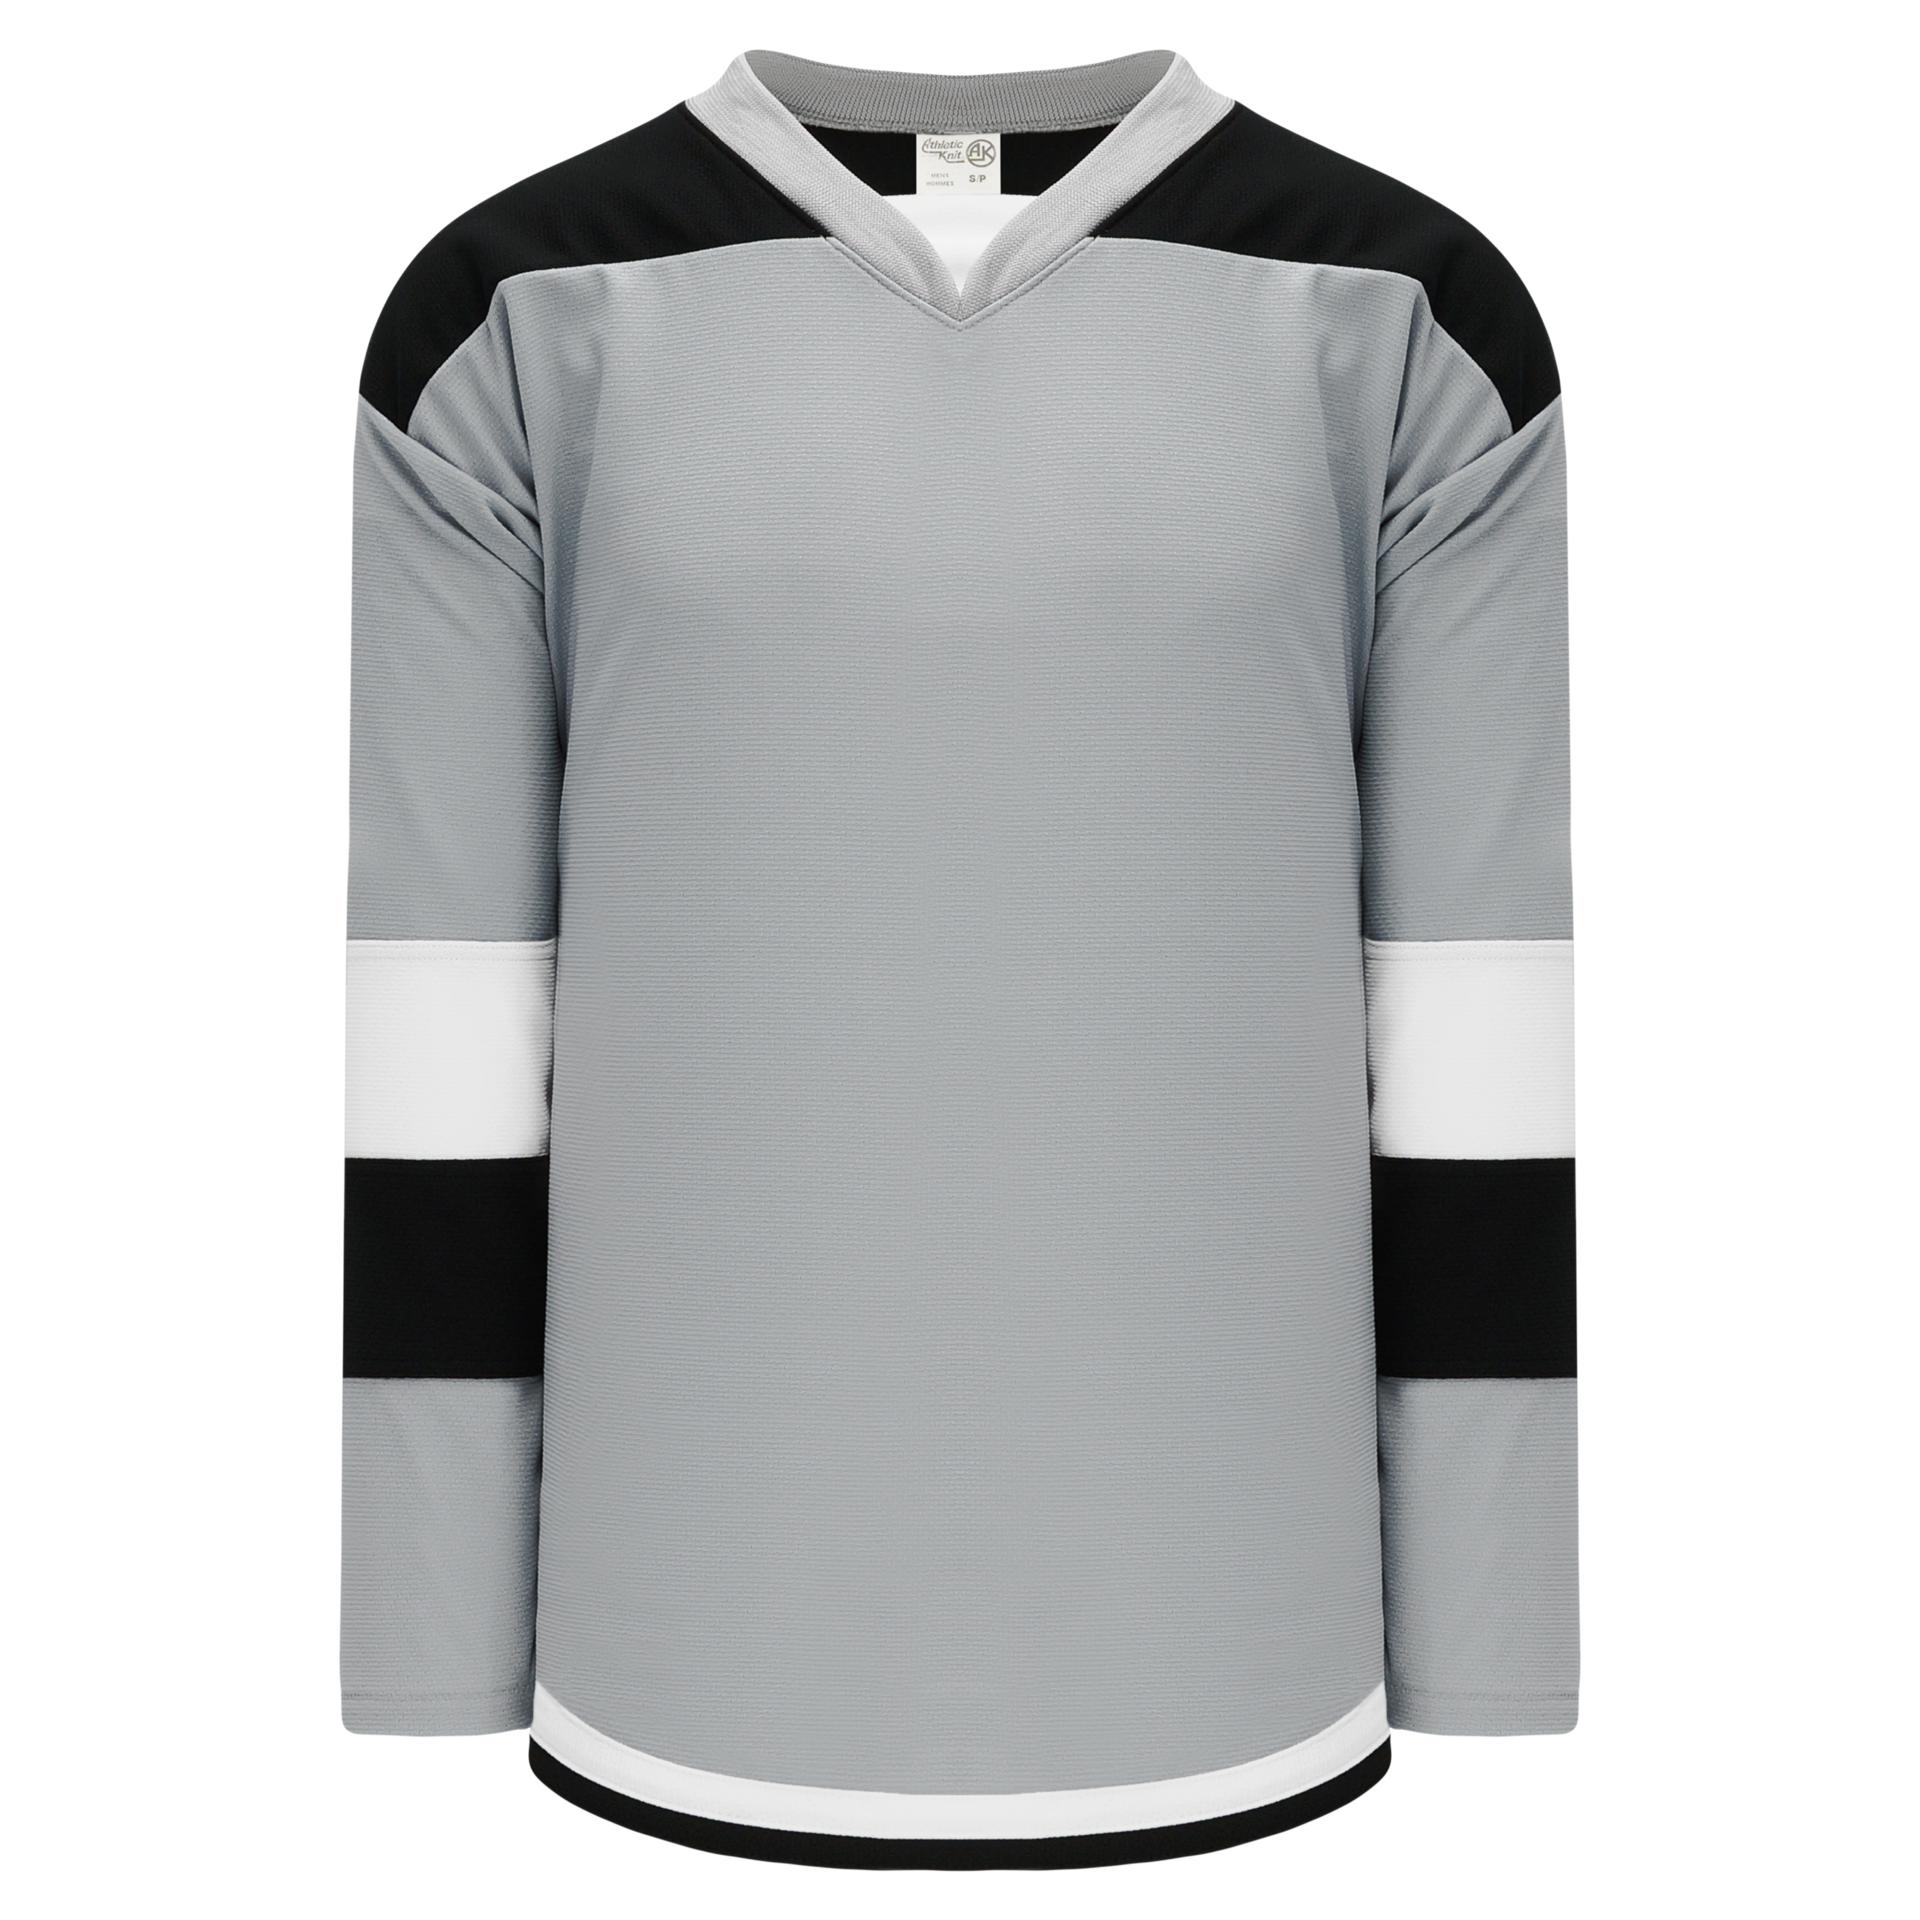 Black tampa bay lightning jersey, Jackets nhl, Hockey team jacket